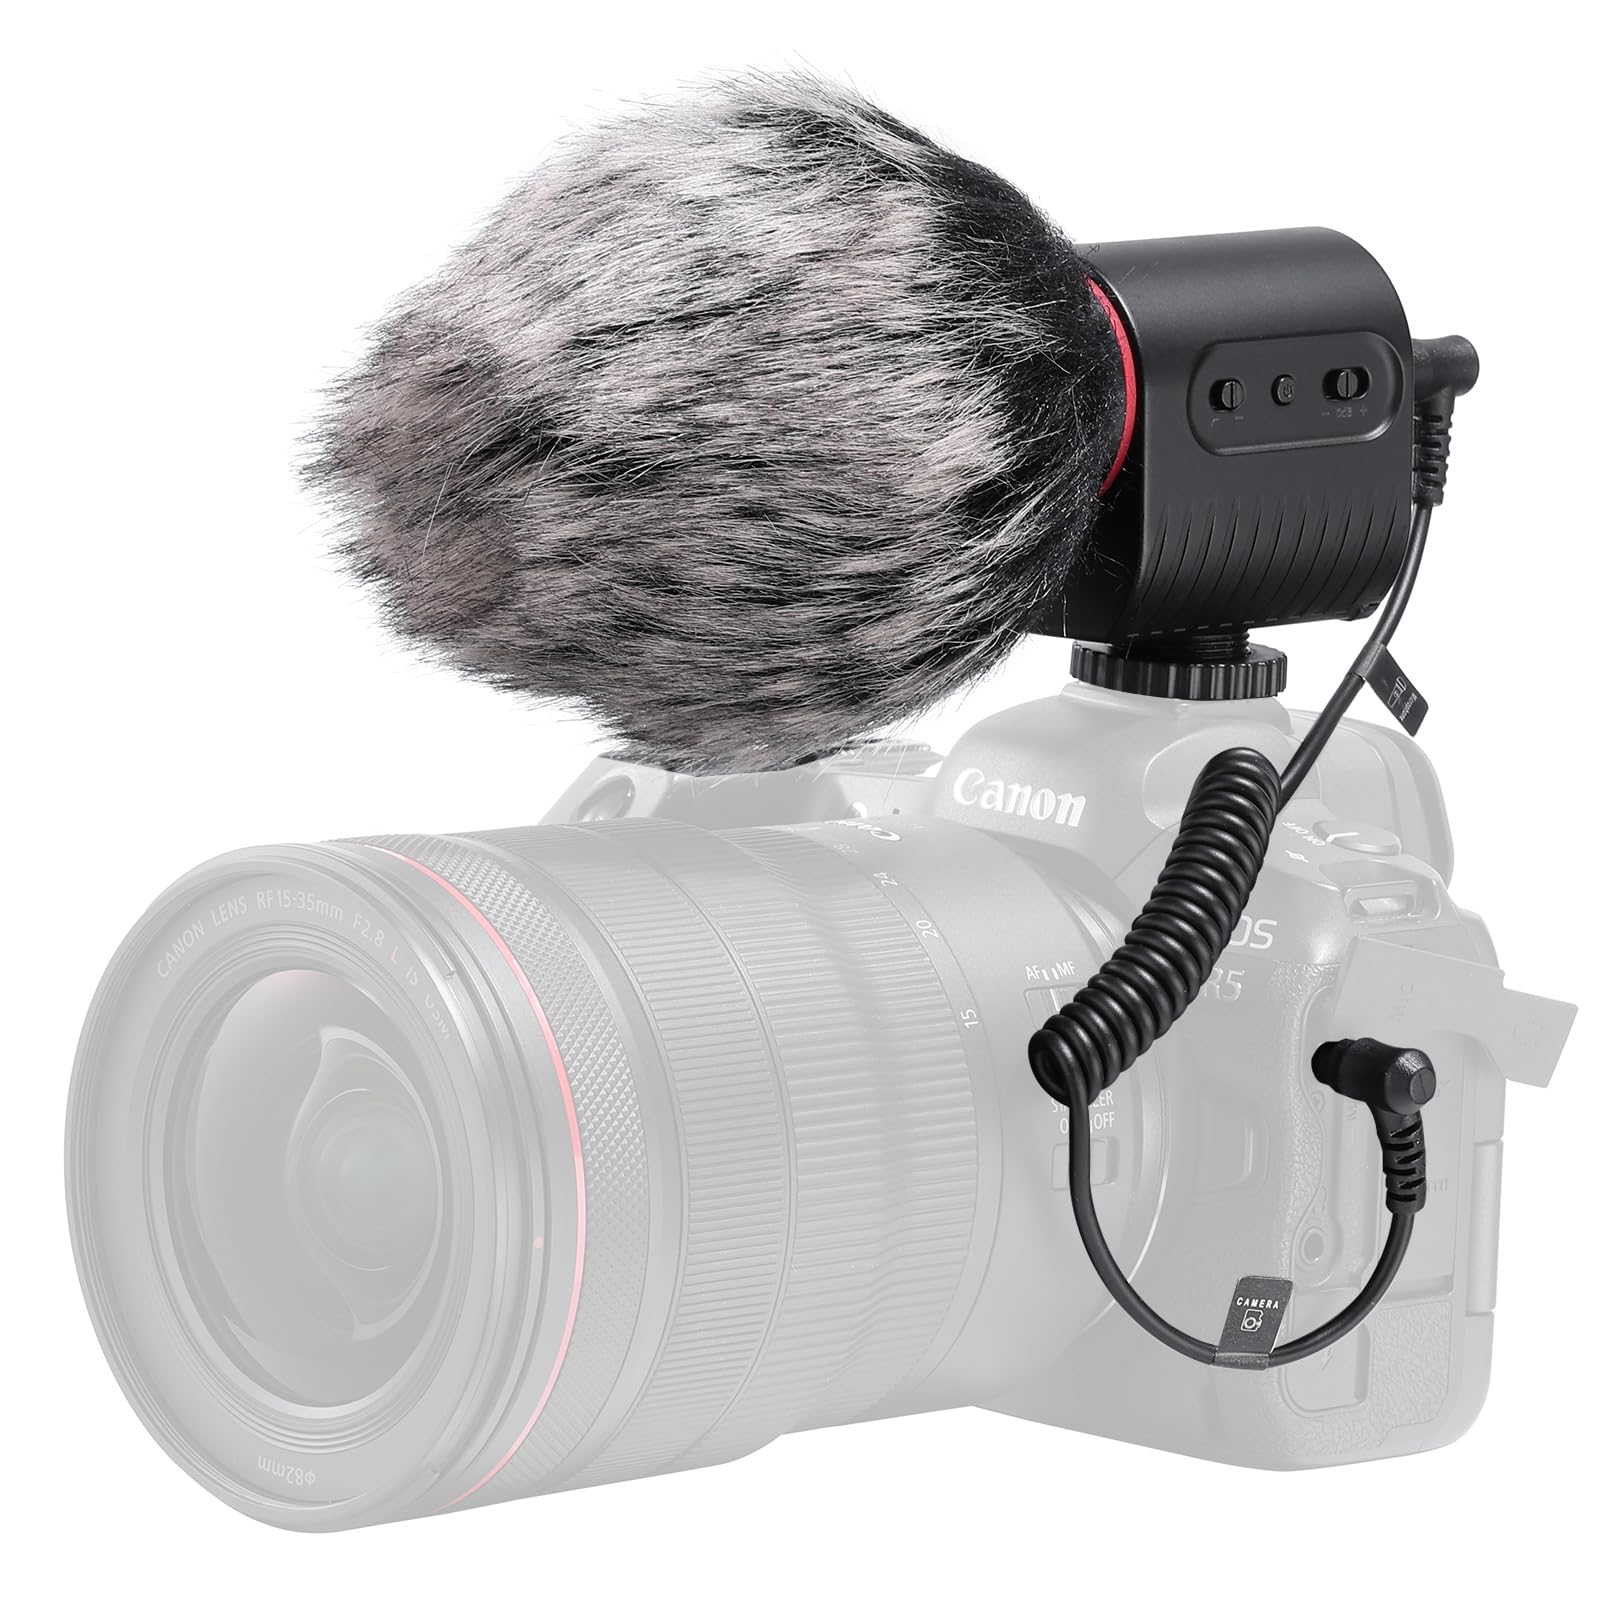 Ulanzi WM-02 Pro カメラ用マイク ビデオマイク ガンマイクロフォン 外付けマイク 超単一指向性 三重ノイズキャンセリング 同時聴取機能 電池式 プラグアンドプレイ 3.5mmデジタルビデオ録音用マイク ウインドスクリーン付属 Canon Nikon Sony DSLRカメラなど用 web会議 Vlog